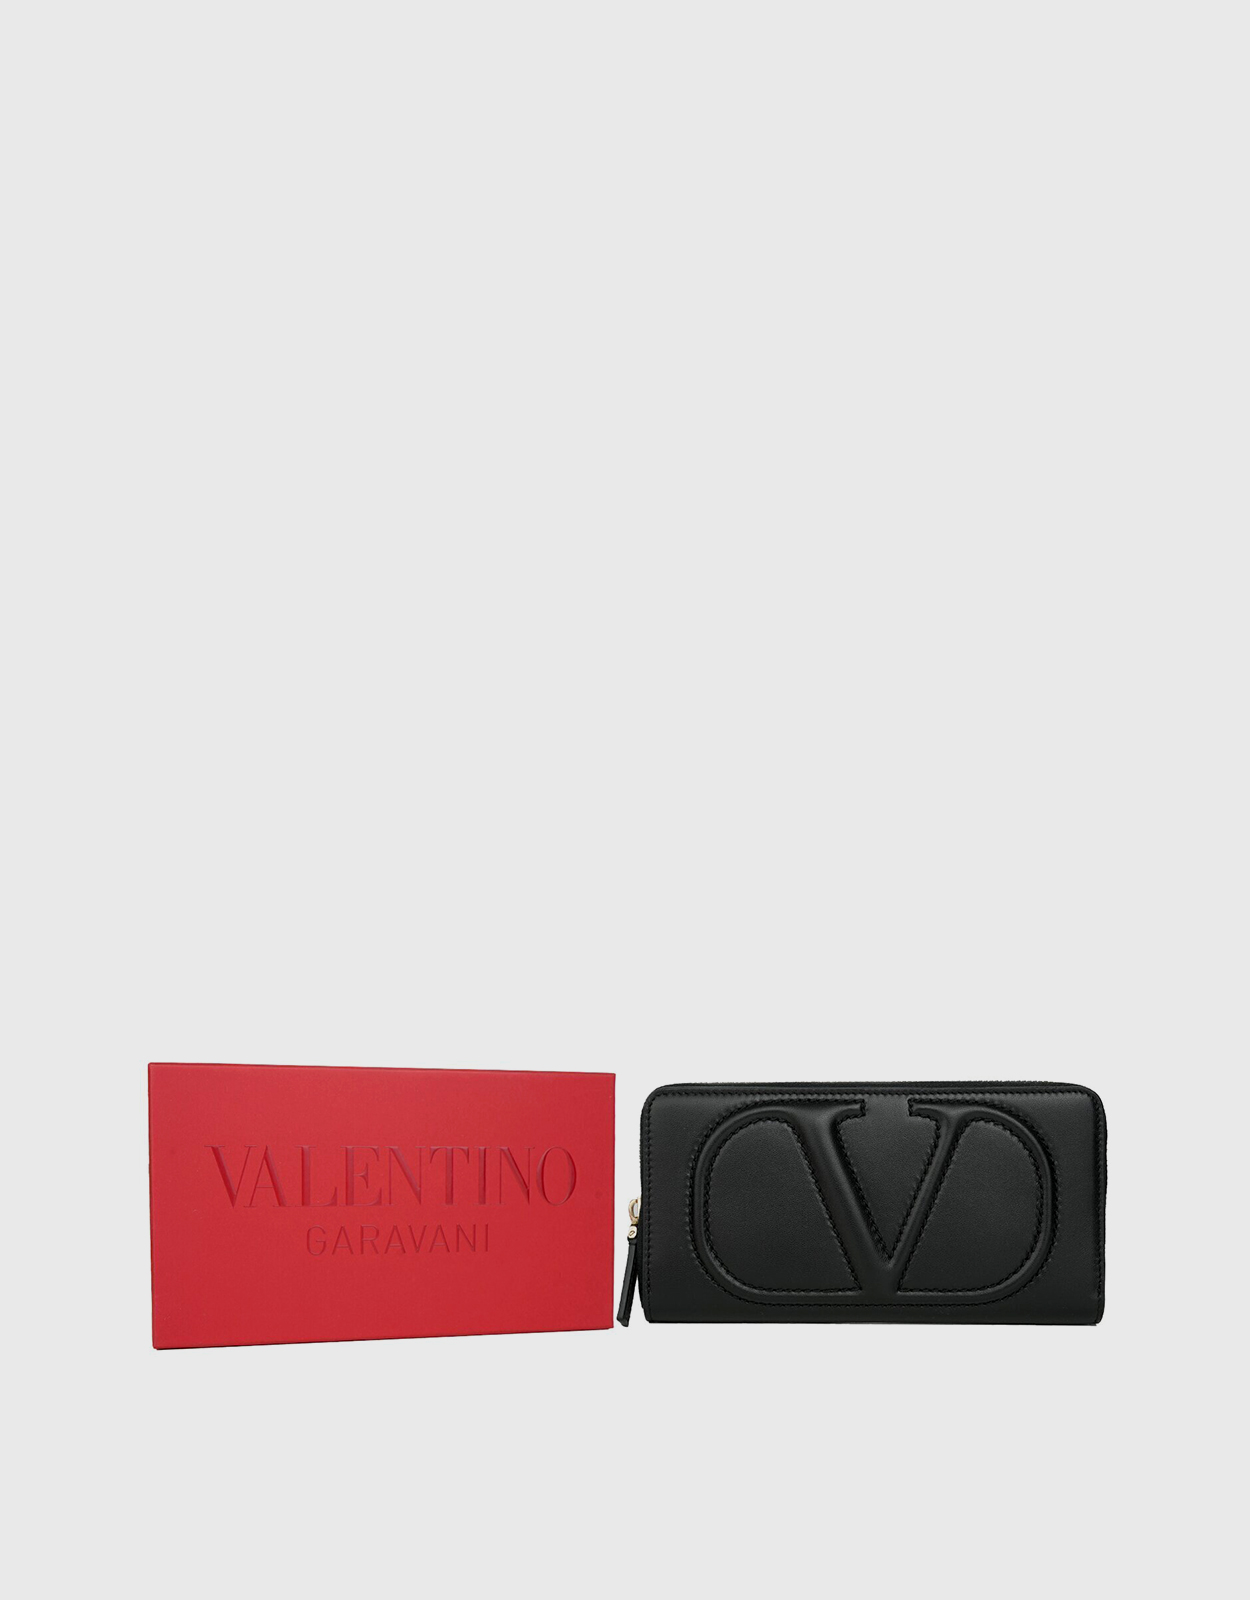 Valentino Black Snakeskin Long Wallet – The Refind Closet